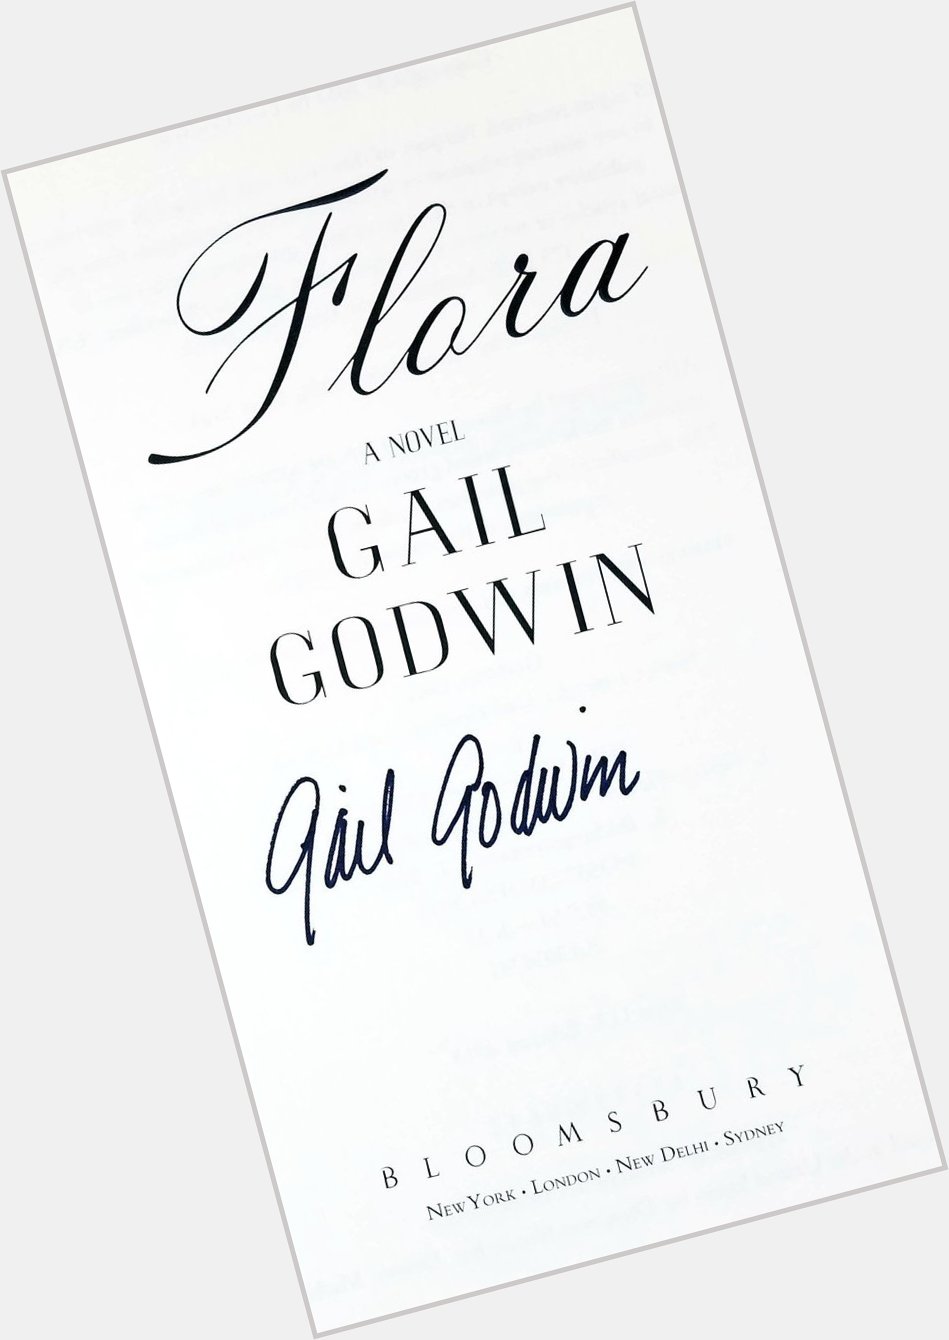 Happy Birthday to Gail Godwin!  